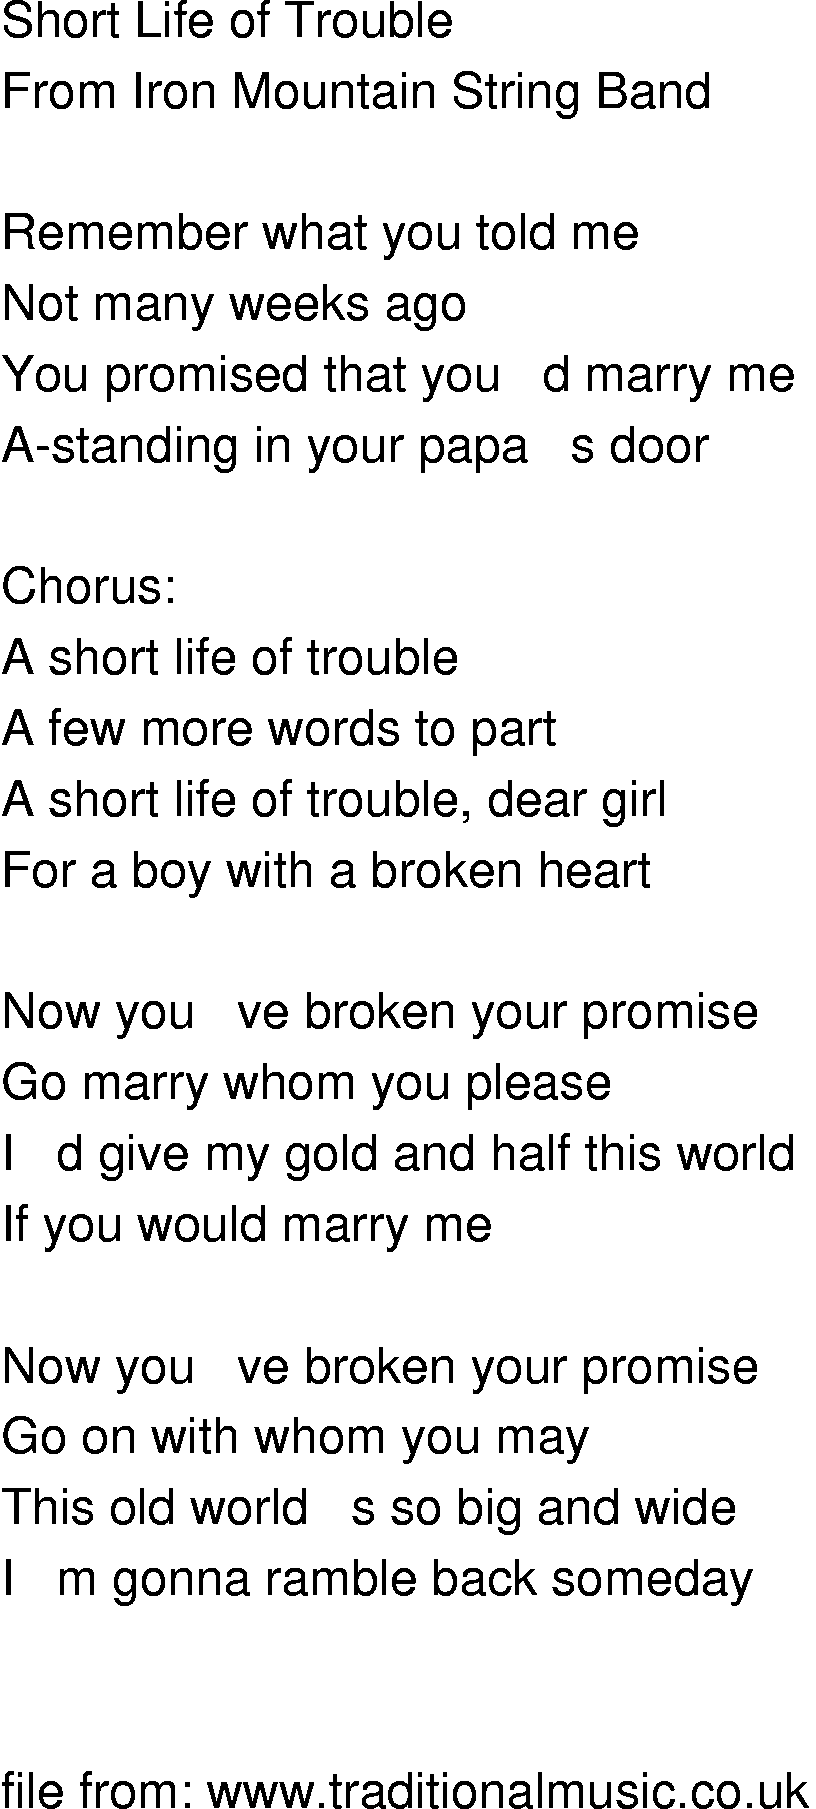 Old-Time (oldtimey) Song Lyrics - short life of trouble